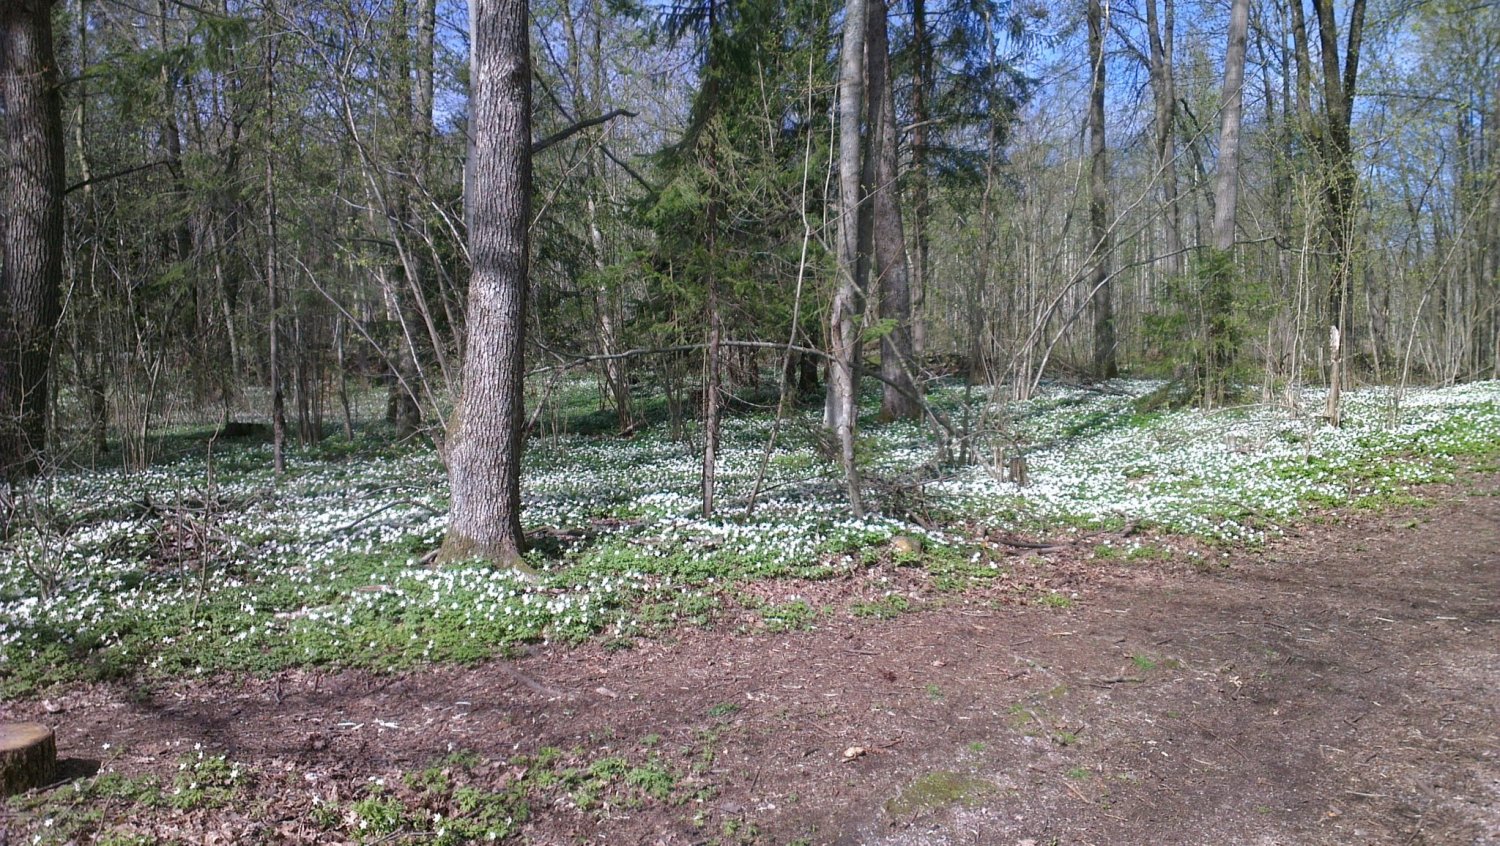 Spring flowers in the wood in Horten